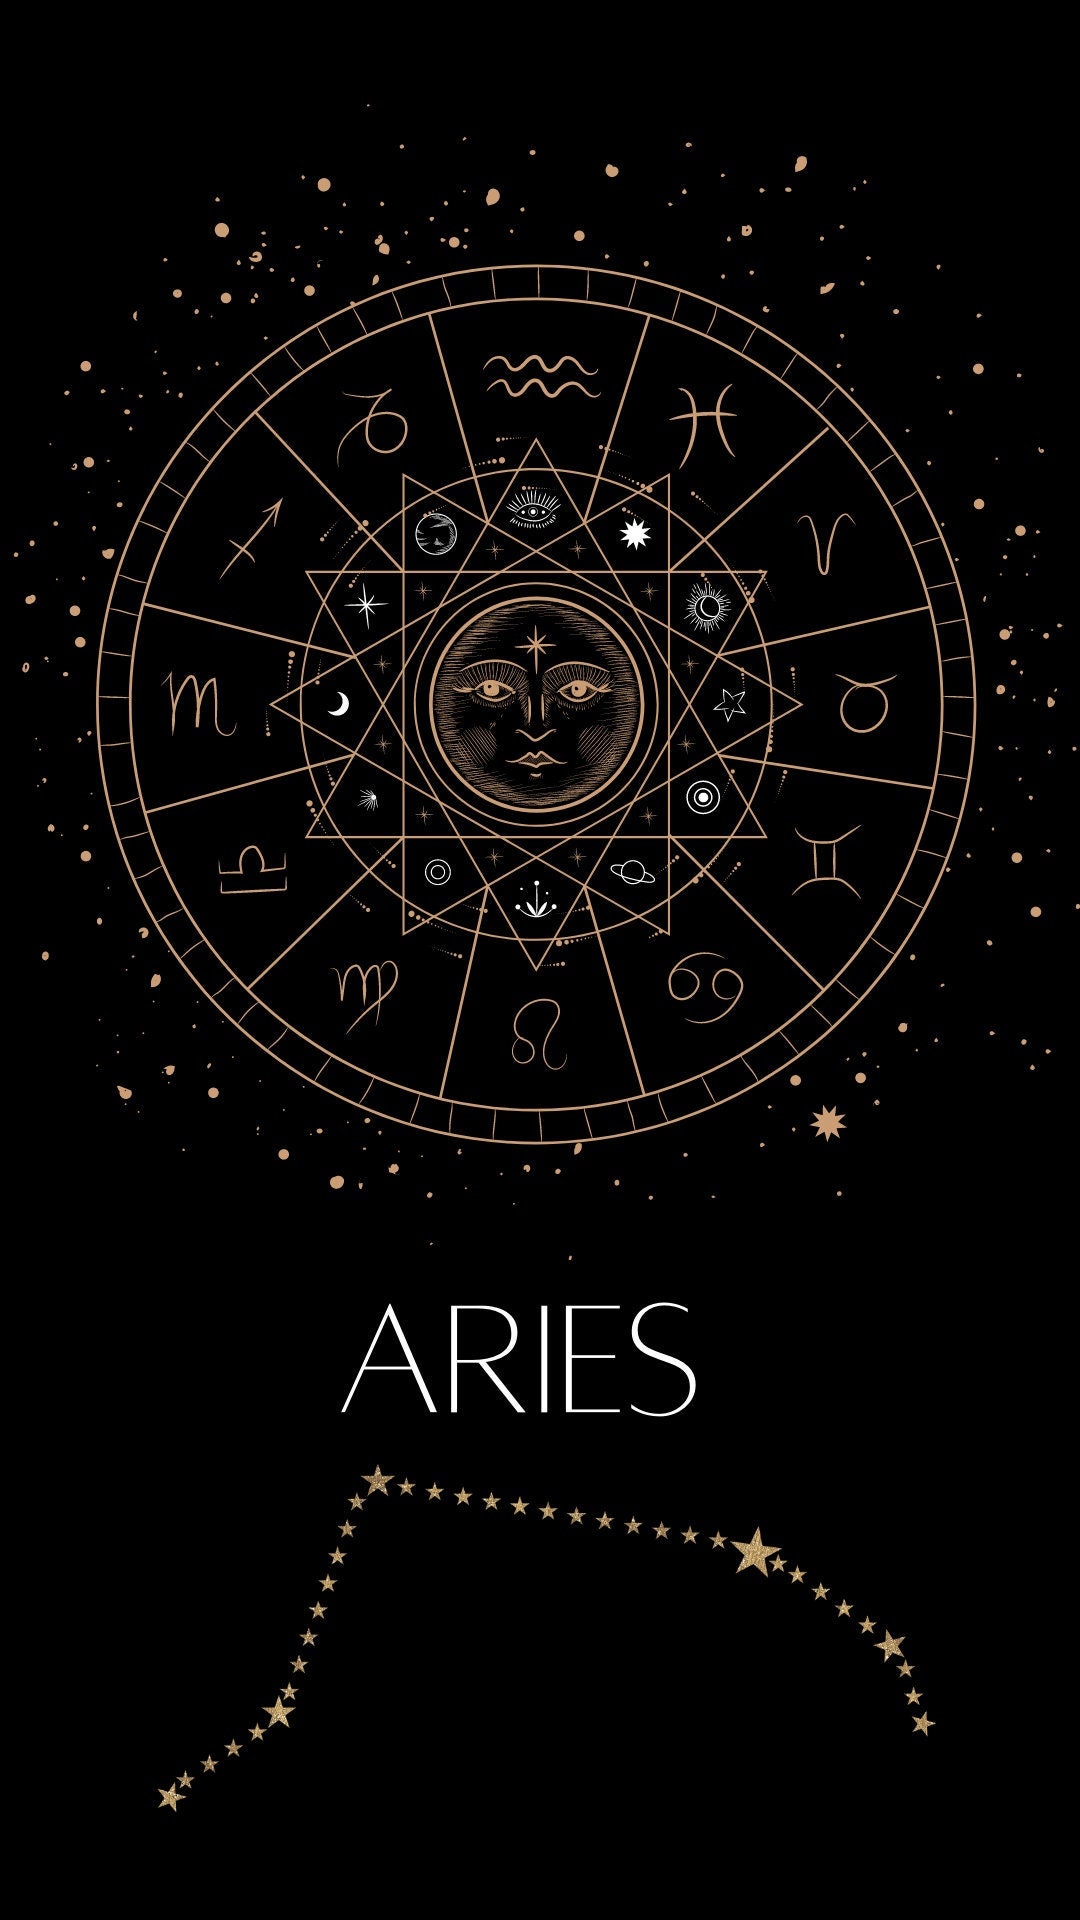 Aries wallpaper by Vulnexx  Download on ZEDGE  5967